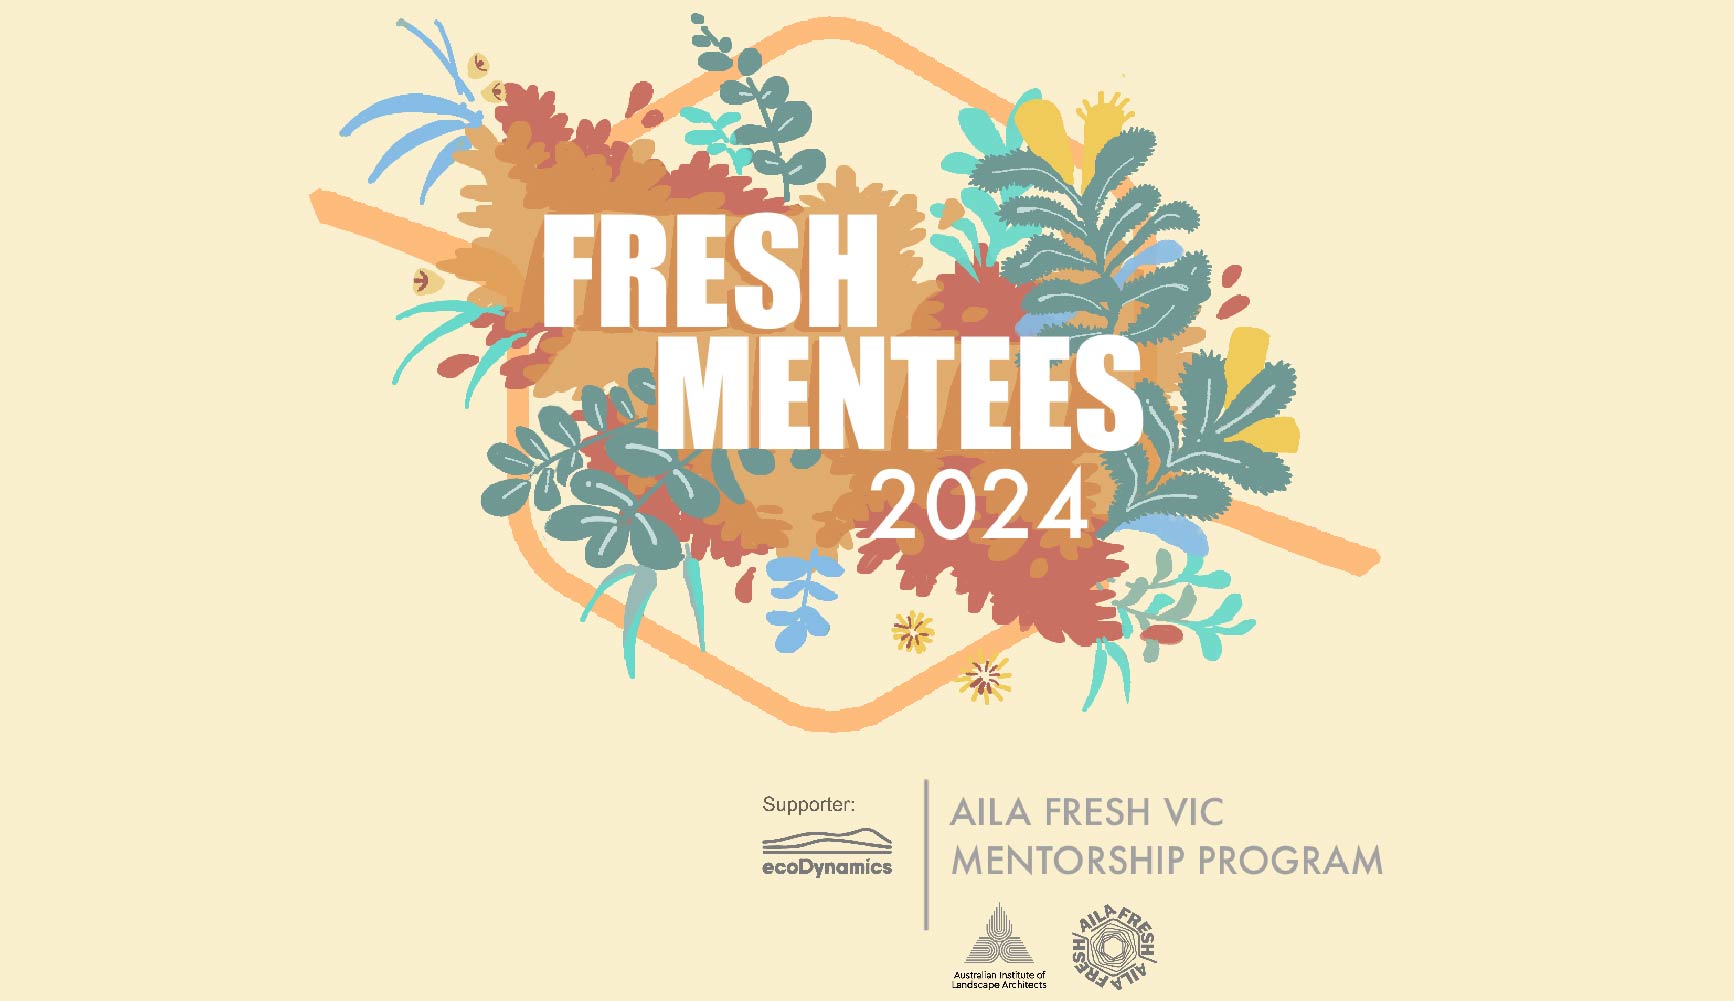 VIC 'Fresh Mentees' 2024 AILA Fresh Mentorship Program